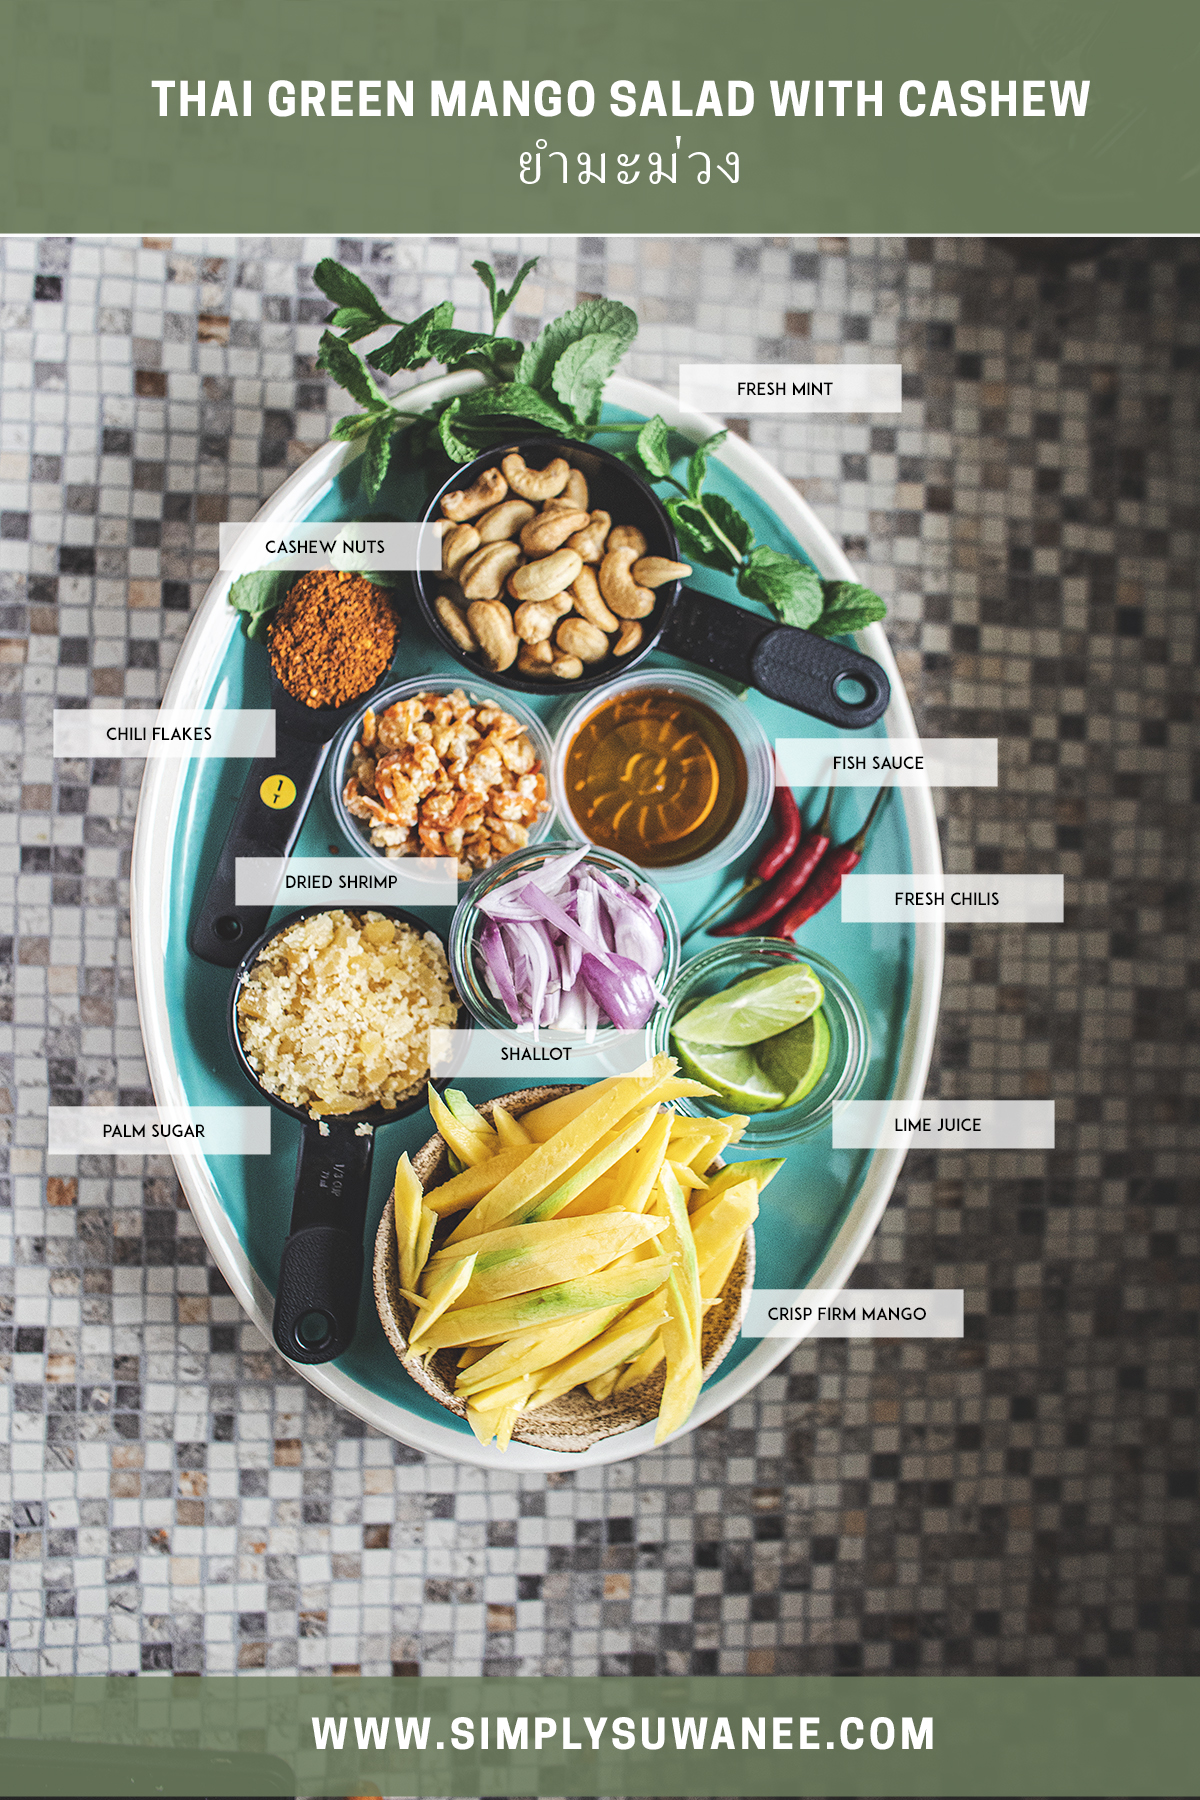 ingredients for thai mango salad